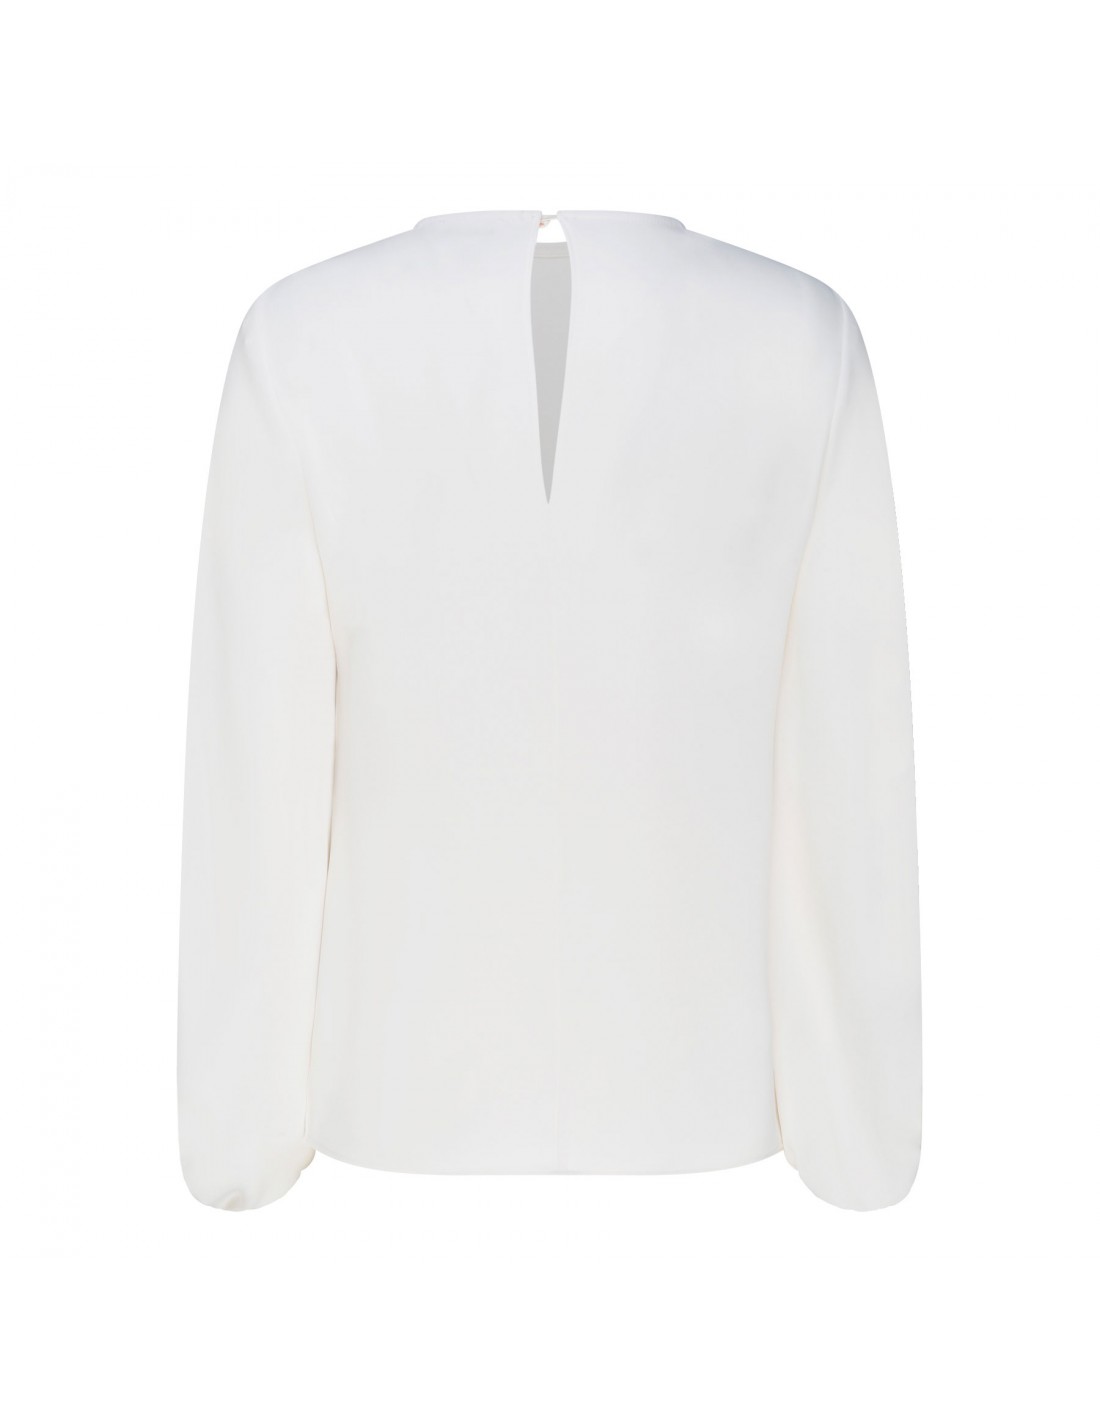 Cream white blouse